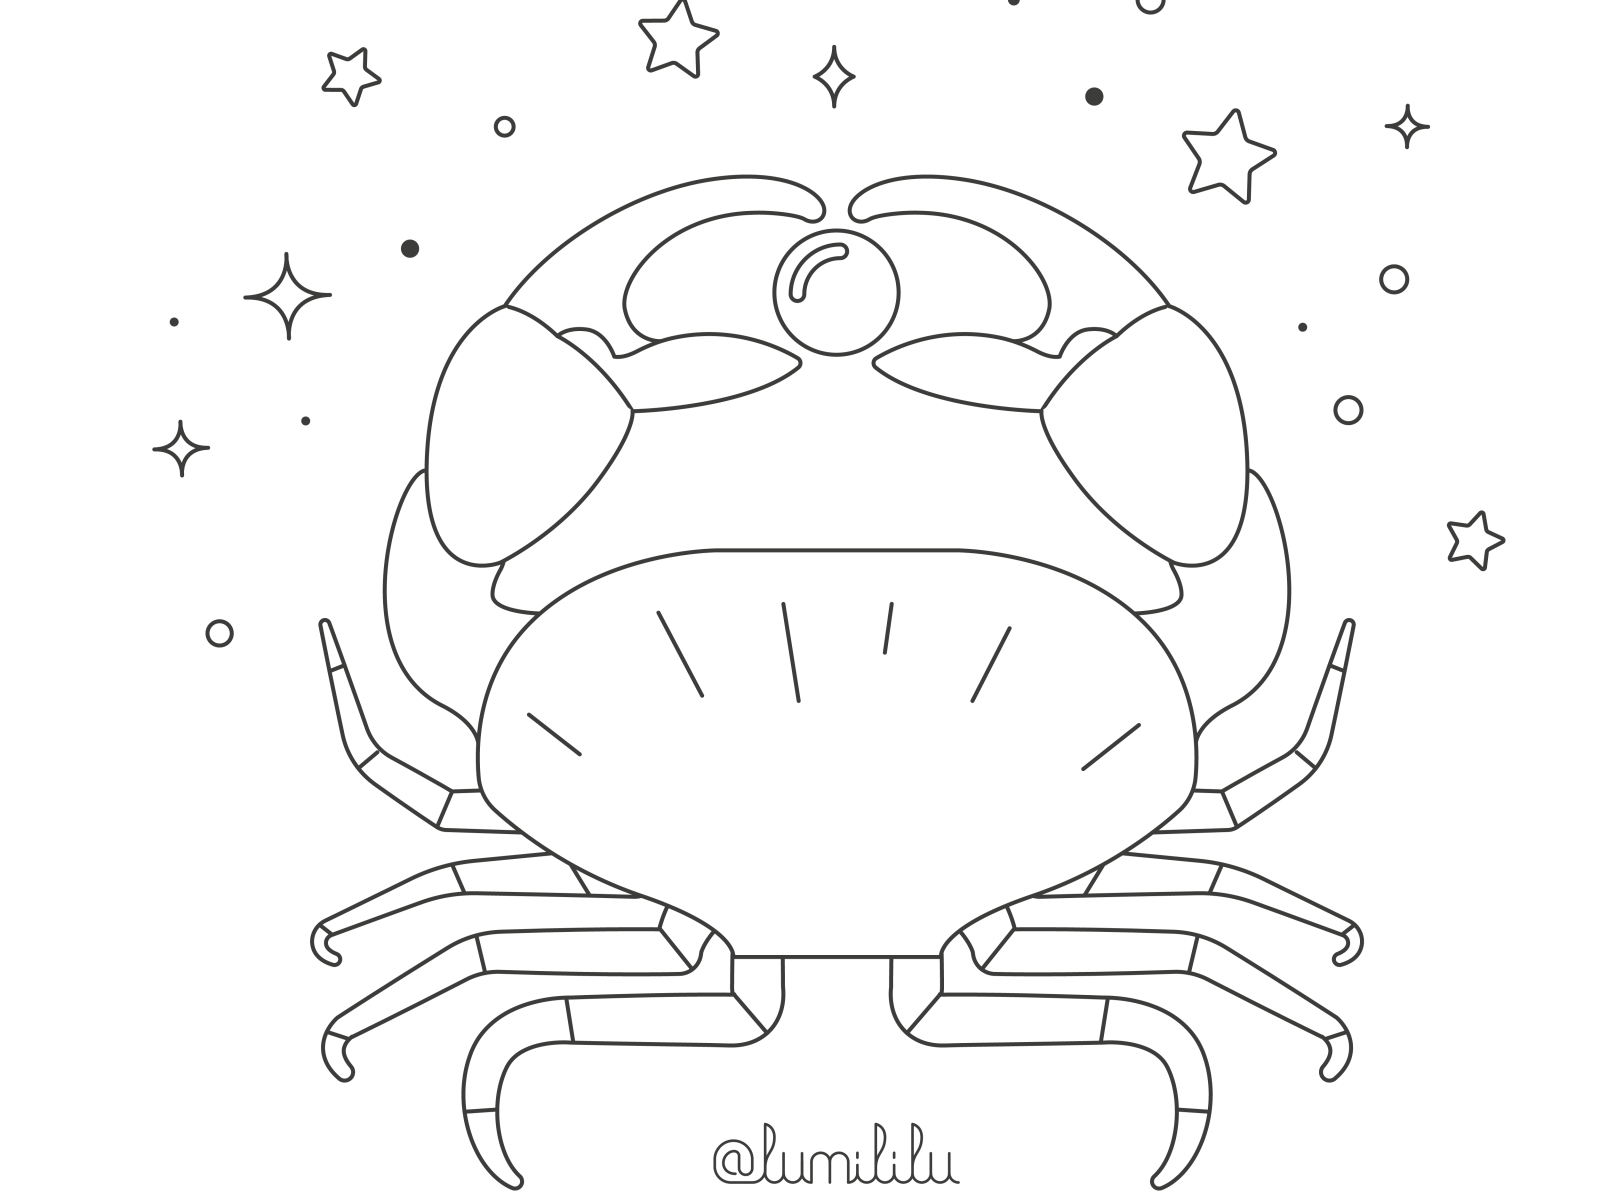 crab by lumililu on Dribbble